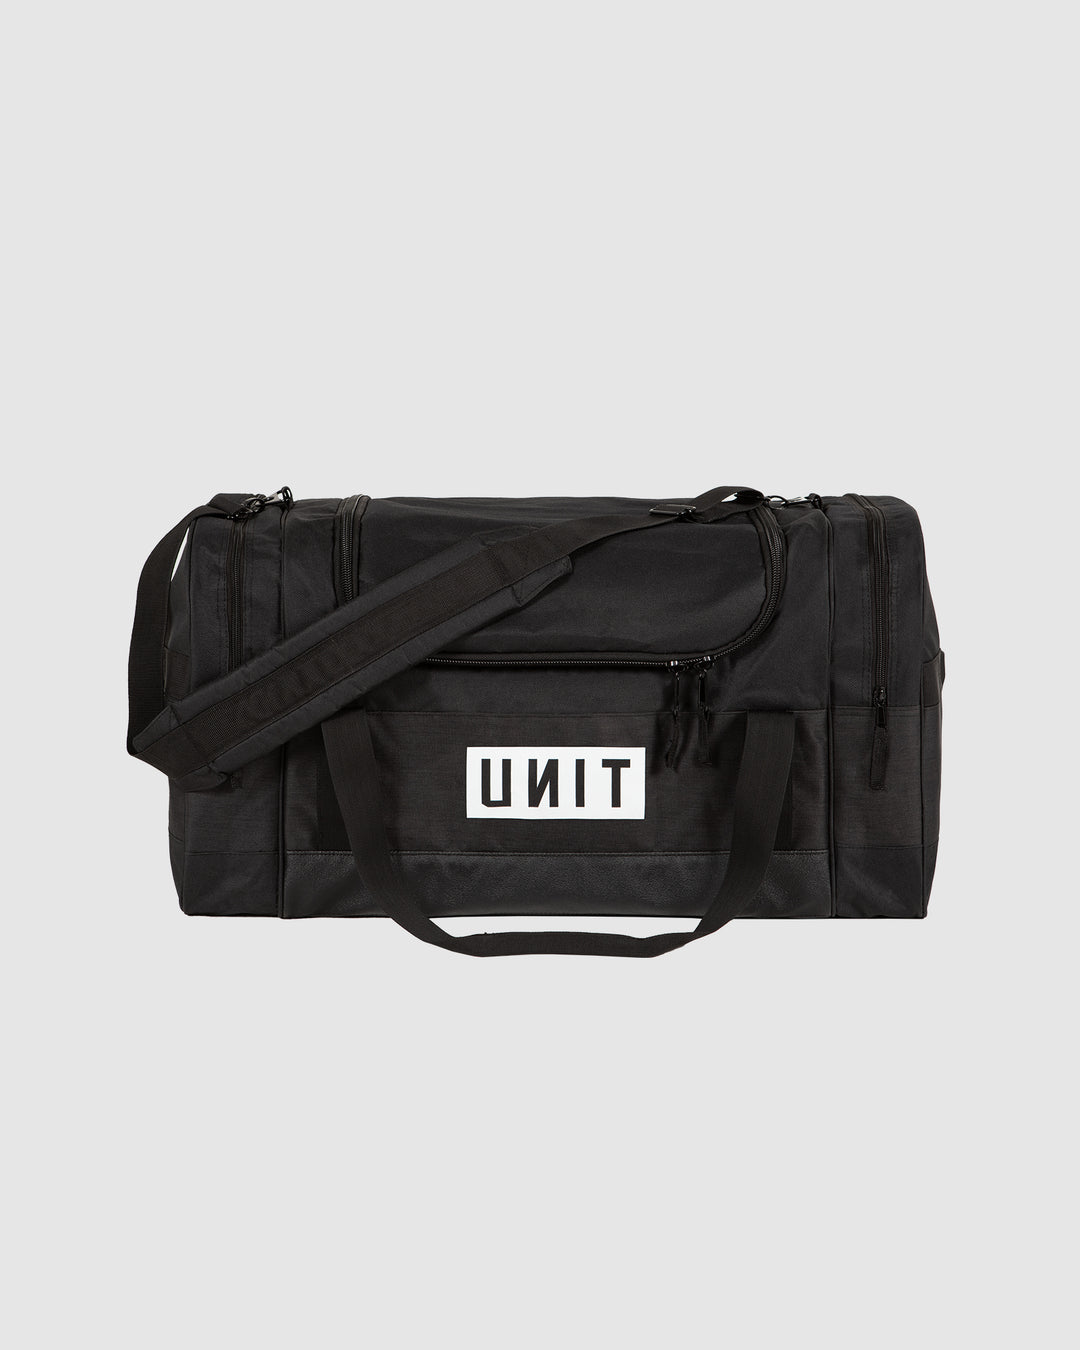 UNIT Stack 76L Large Duffle Bag